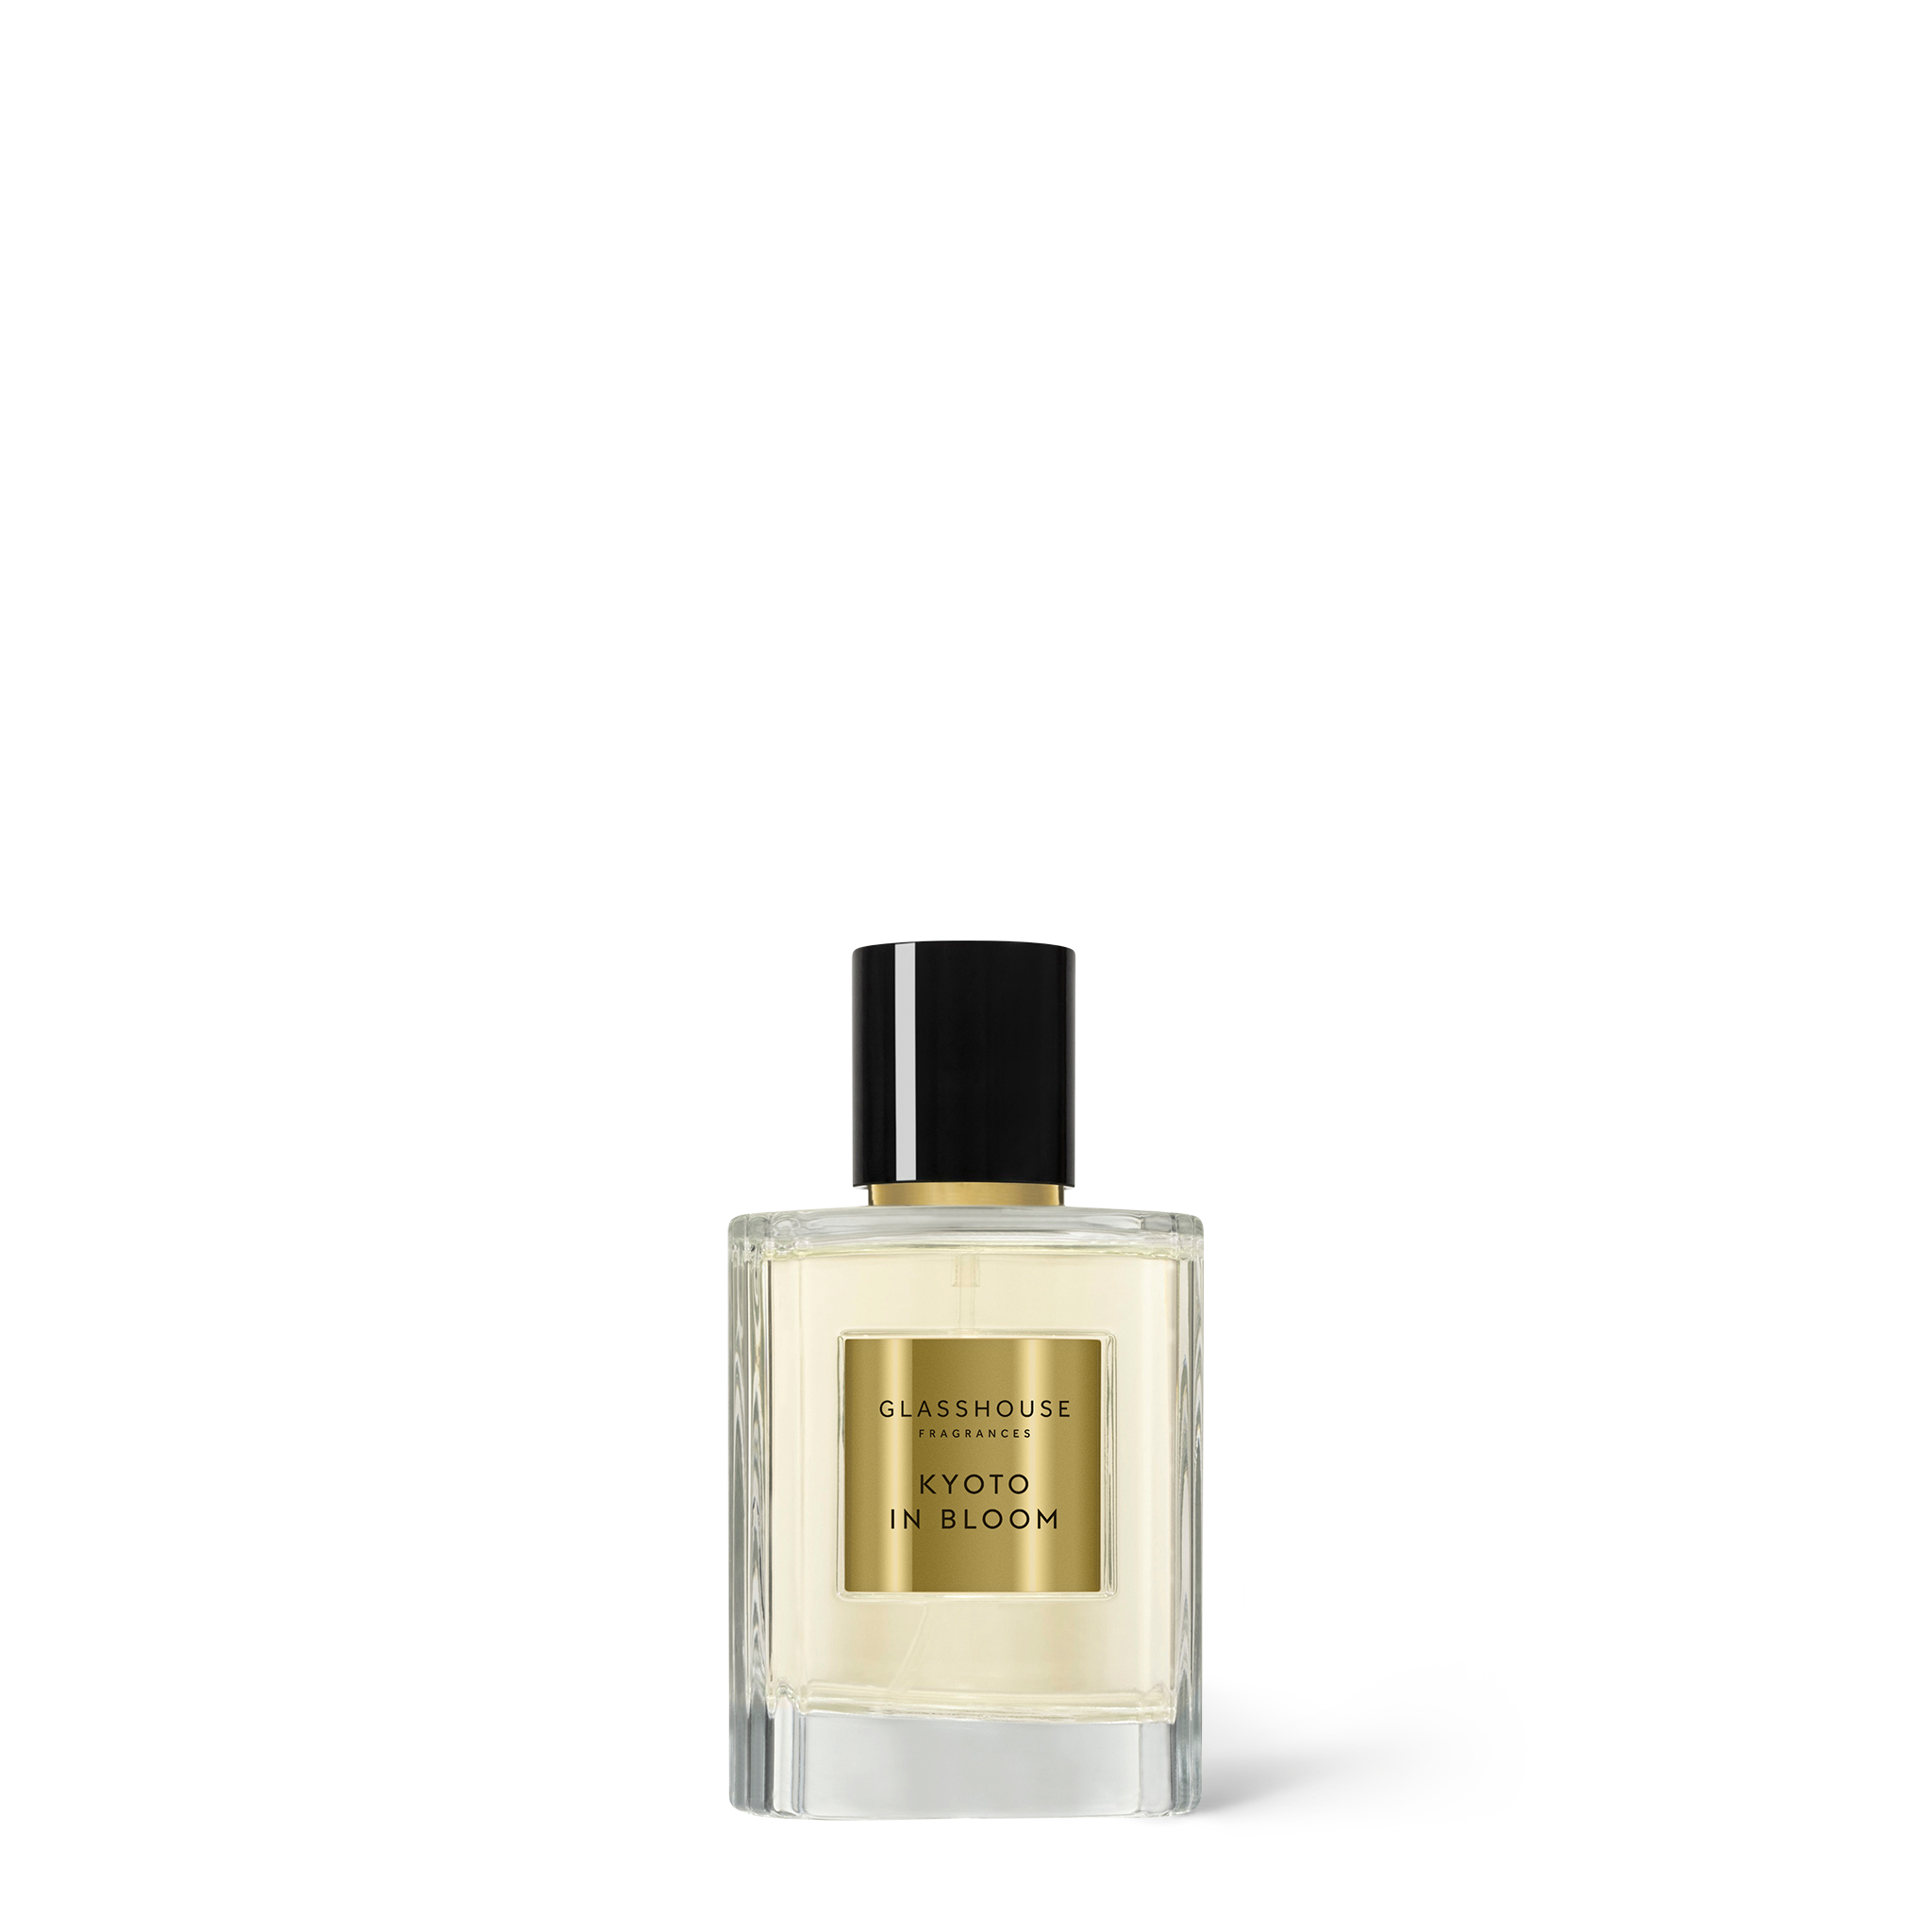 Glasshouse Fragrances Kyoto In Bloom Camellia and Lotus 50mL Eau de Parfum spray - front facing product shot